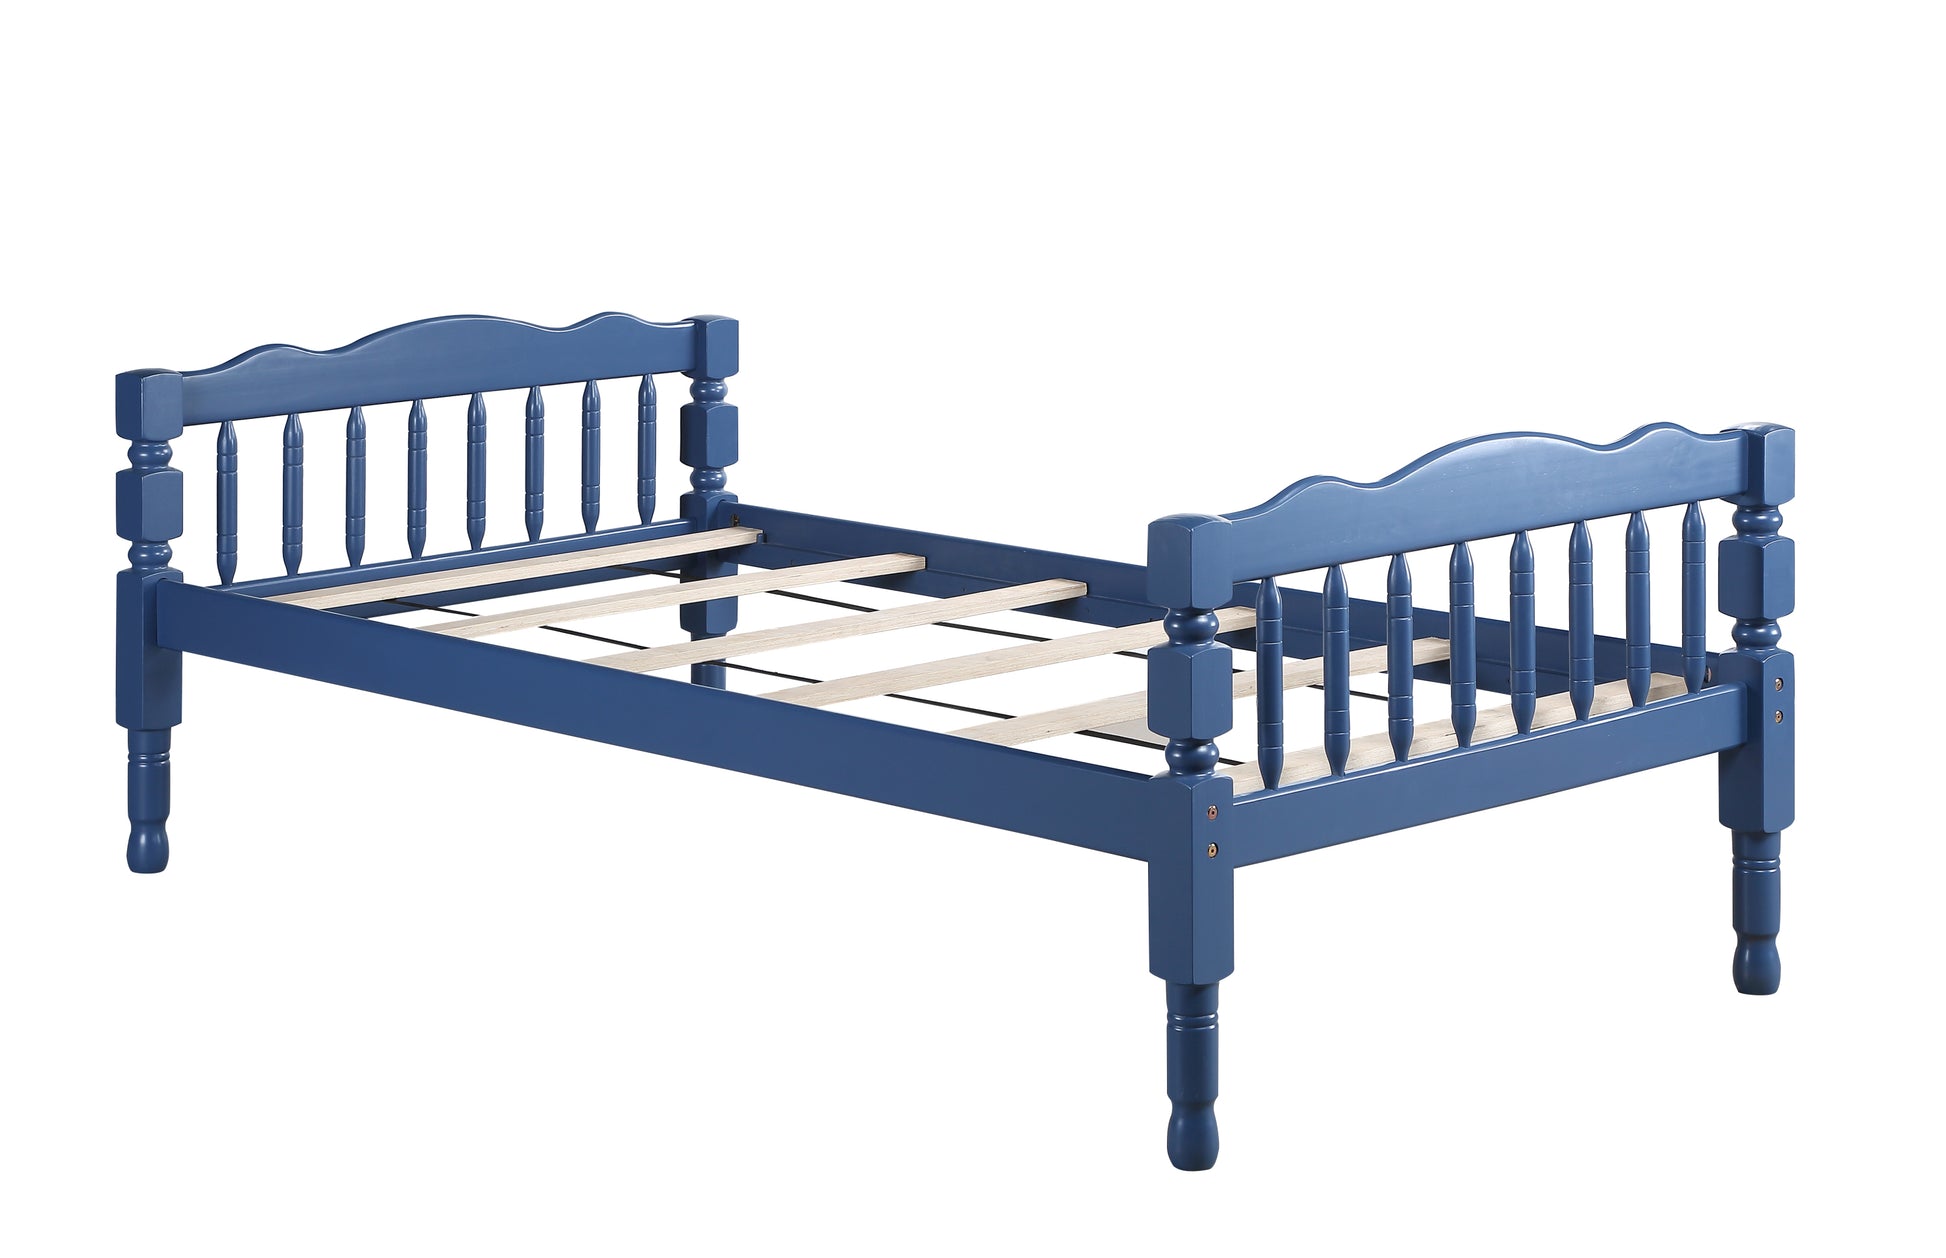 ACME Homestead Twin/Twin Bunk Bed in Dark Blue Finish BD00865